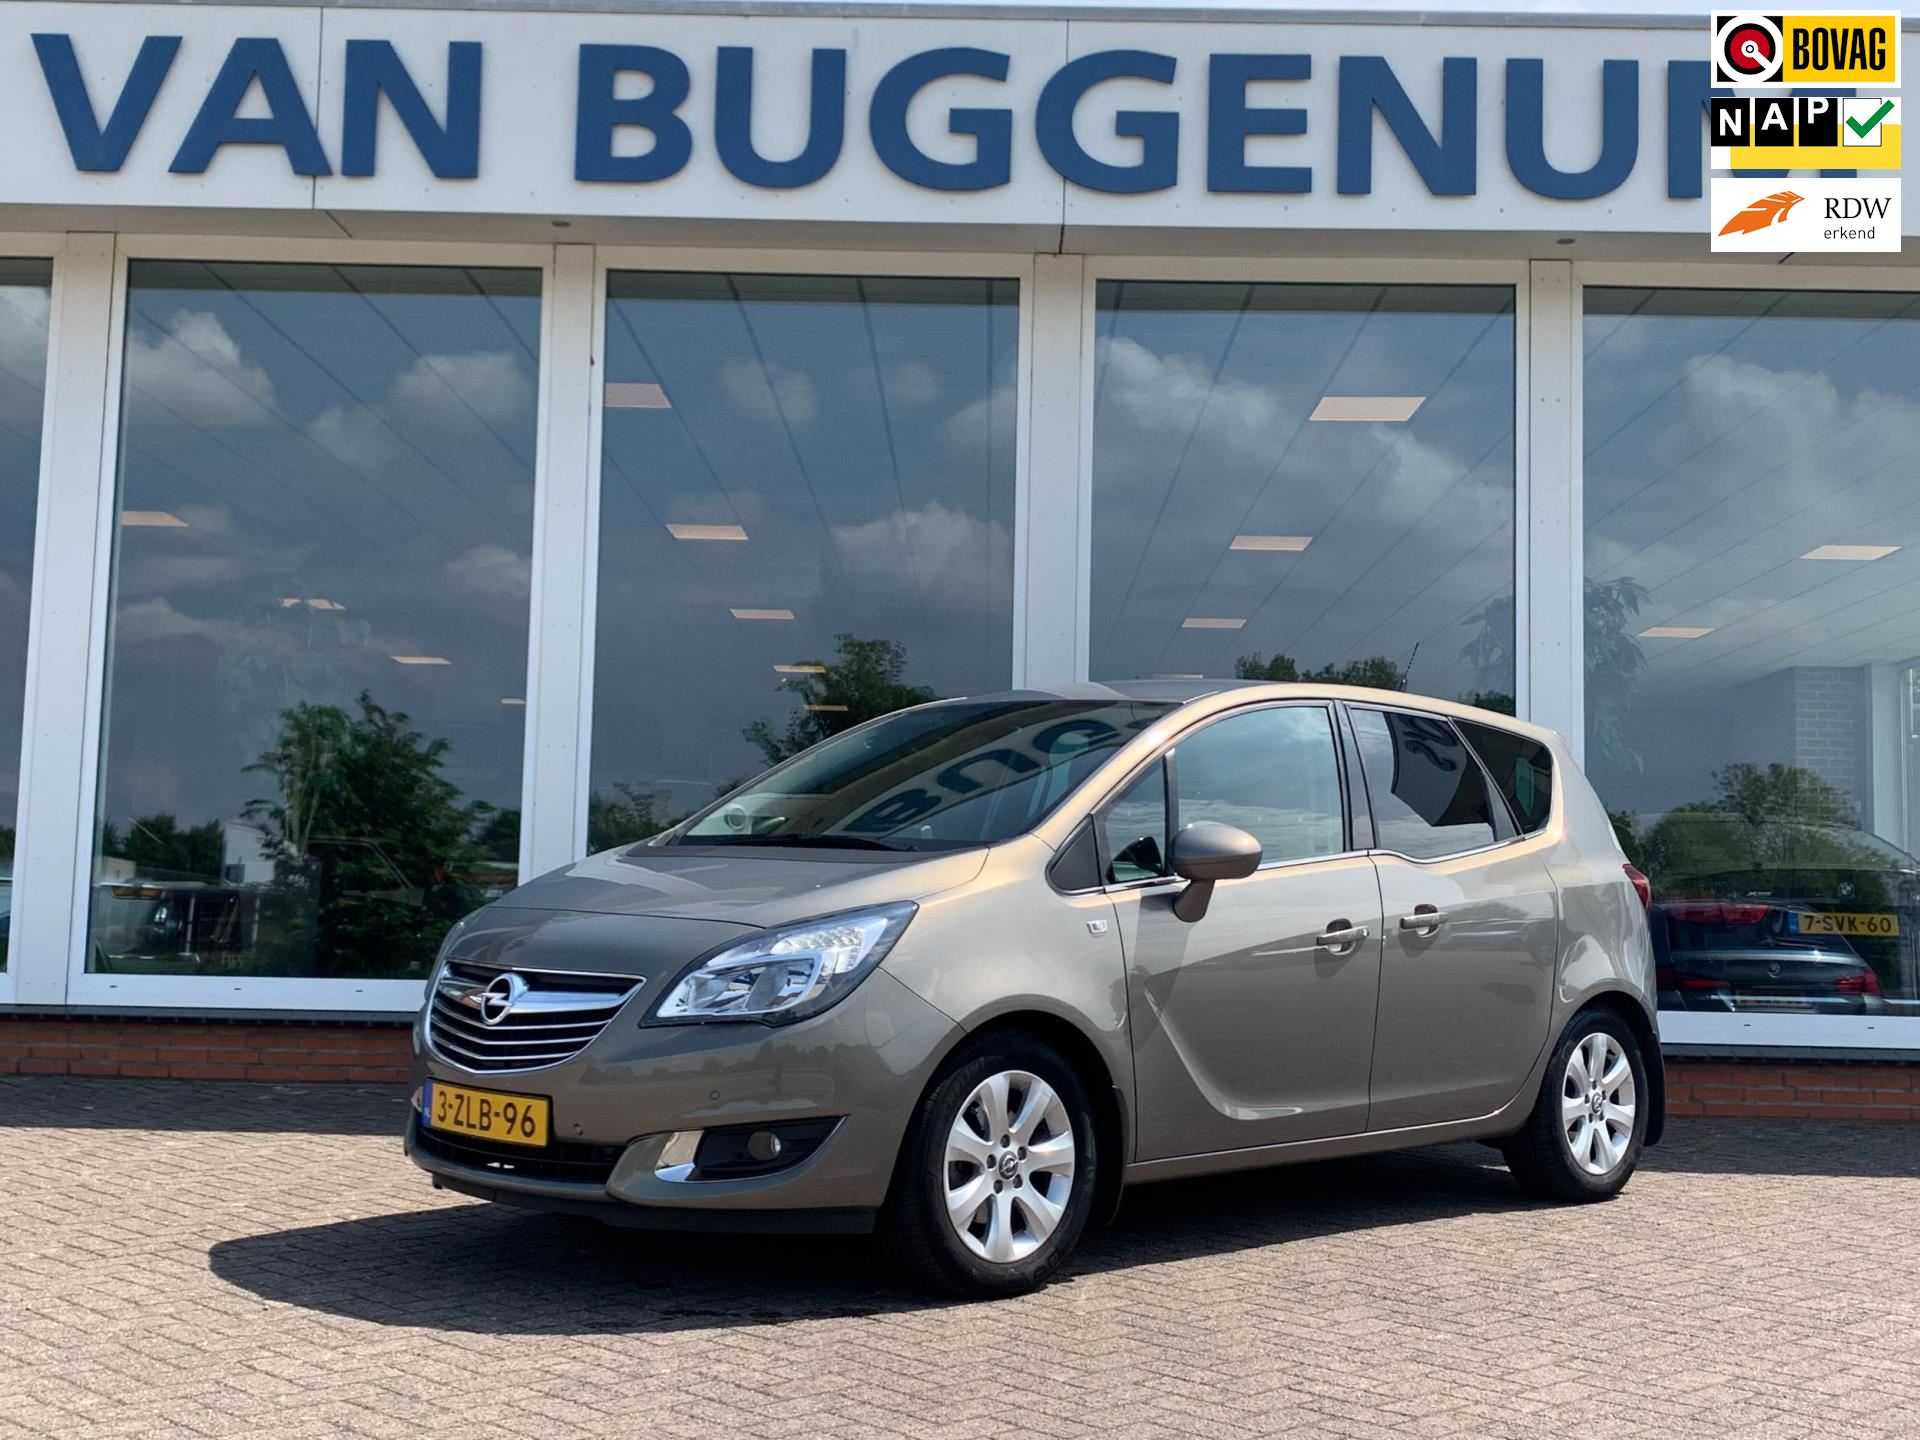 Opel Meriva occasion - Automobielbedrijf J. van Buggenum